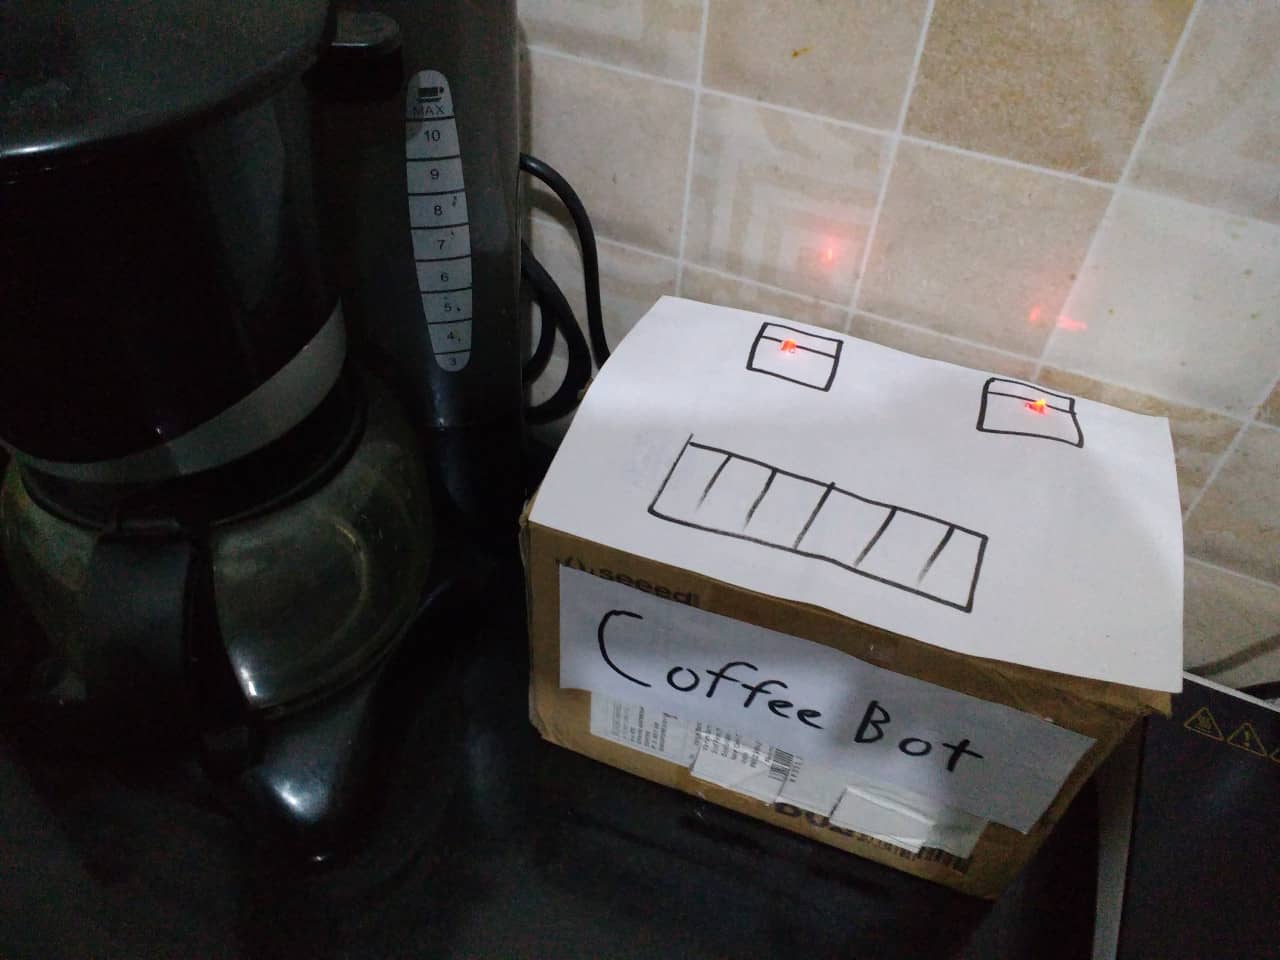 Coffee Bot